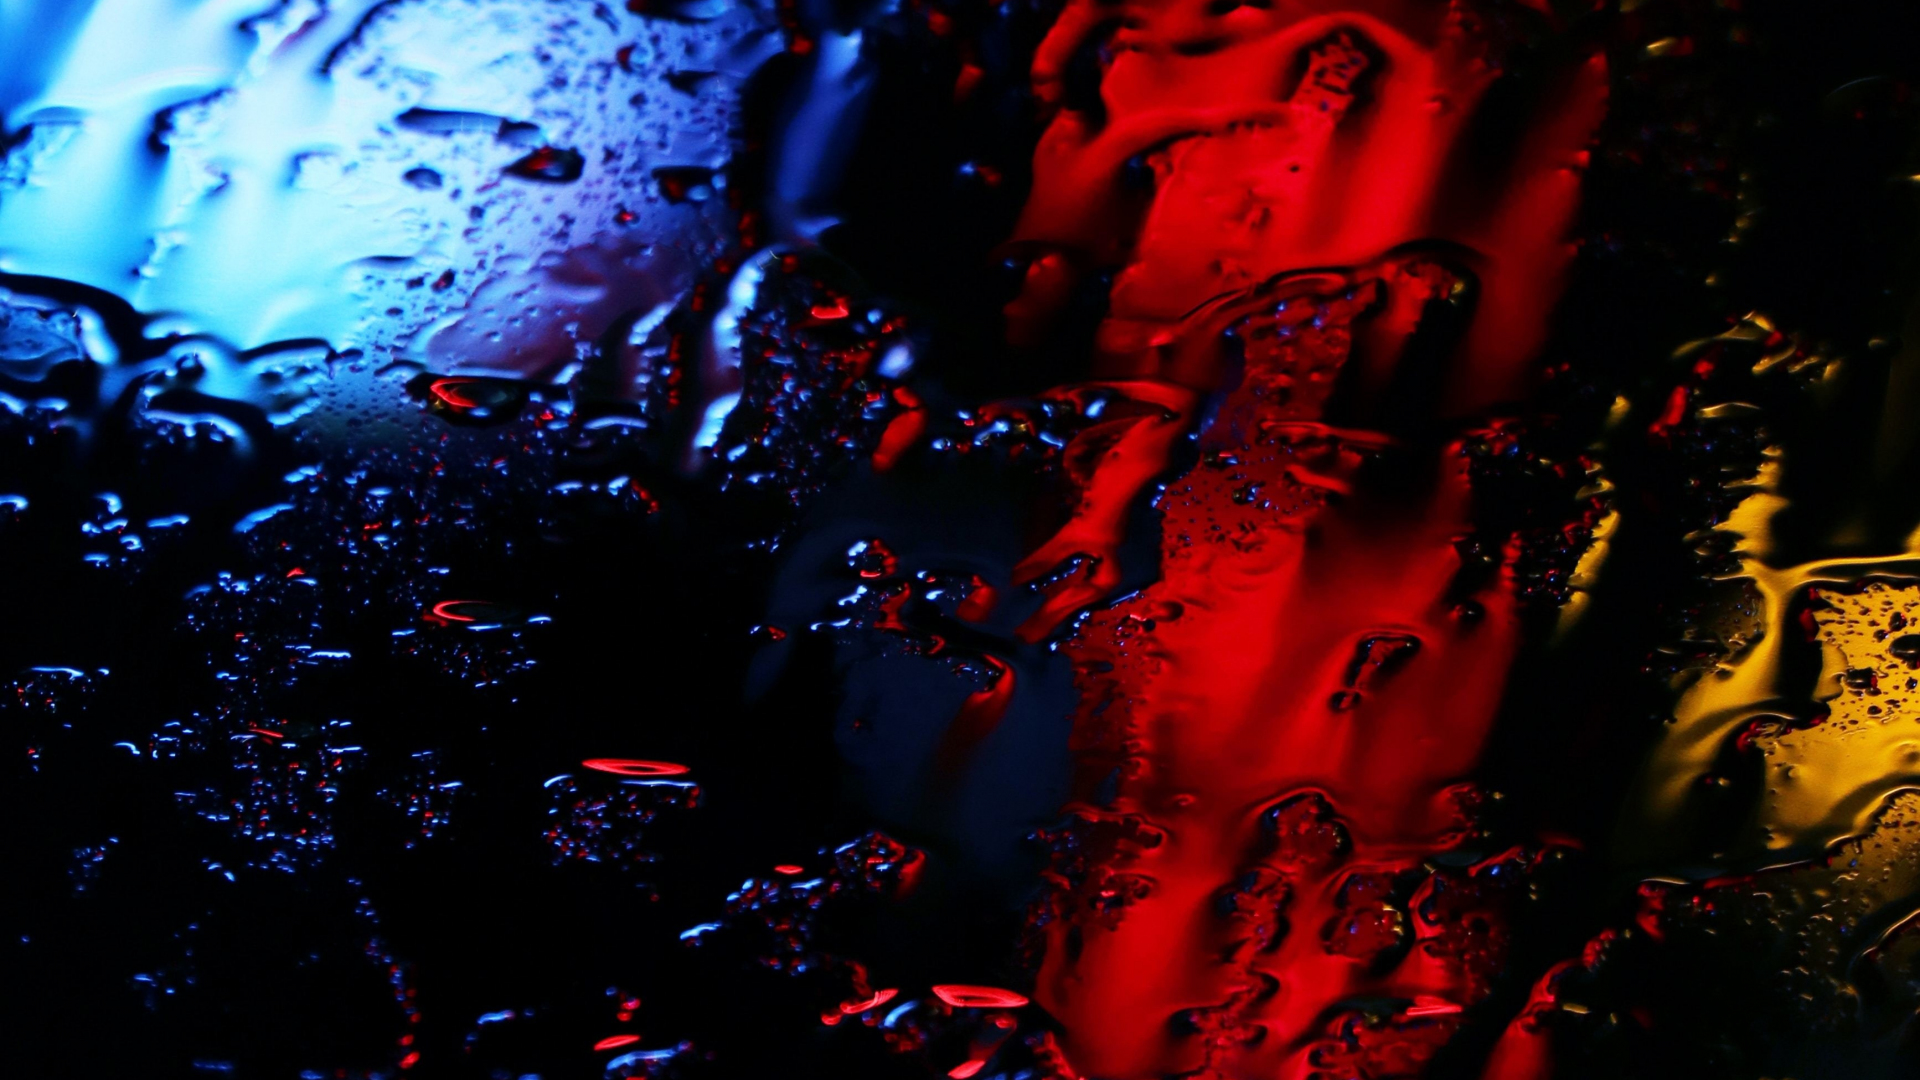 HD wallpaper CloseUp Photo of Water Drops on Glass 4k wallpaper blur  depth of field  Wallpaper Flare